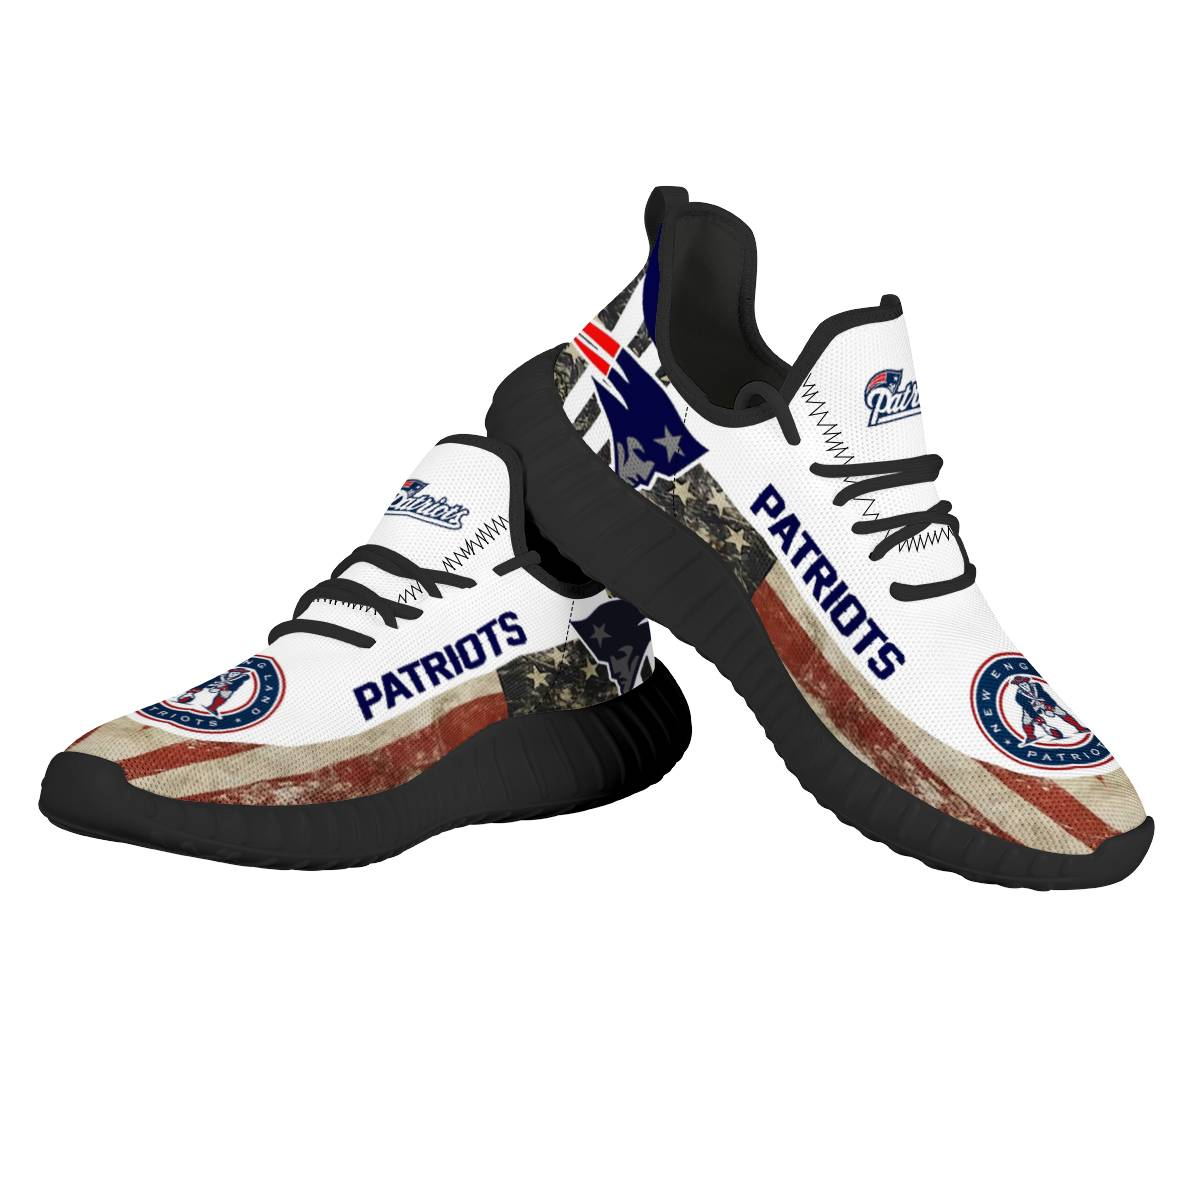 Men's NFL New England Patriots Mesh Knit Sneakers/Shoes 005